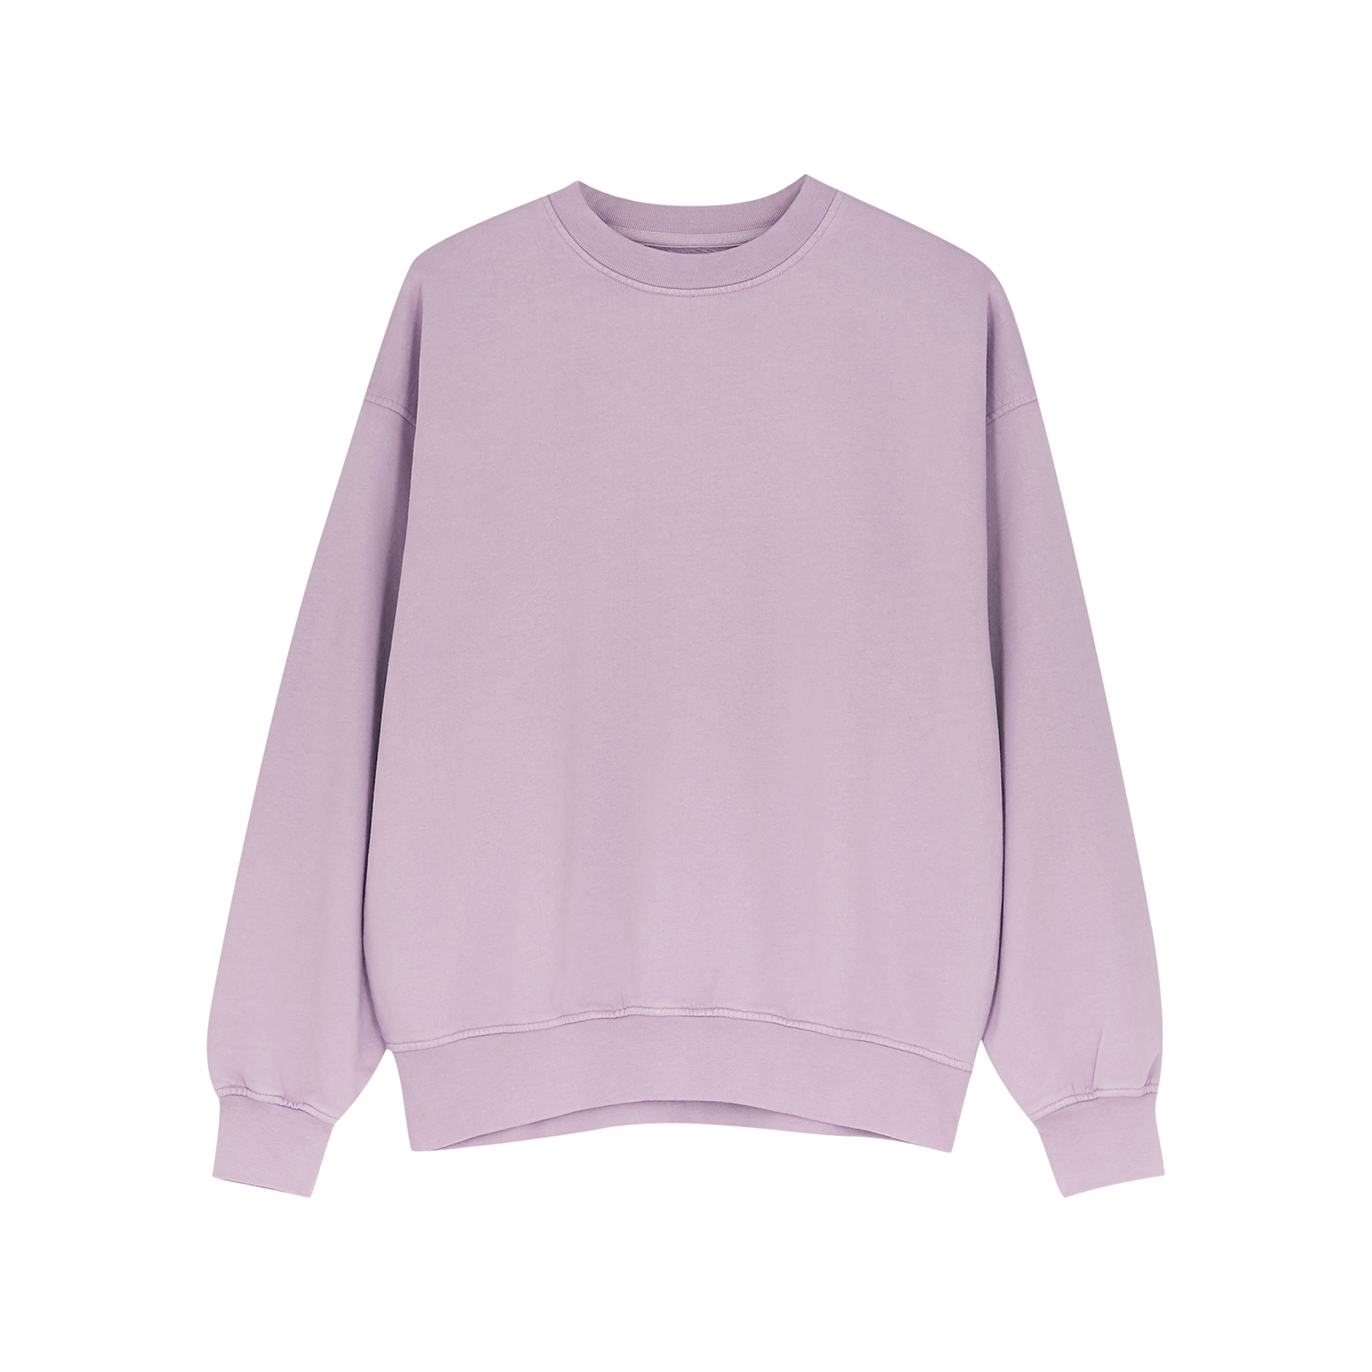 Colorful Standard Cotton Sweatshirt